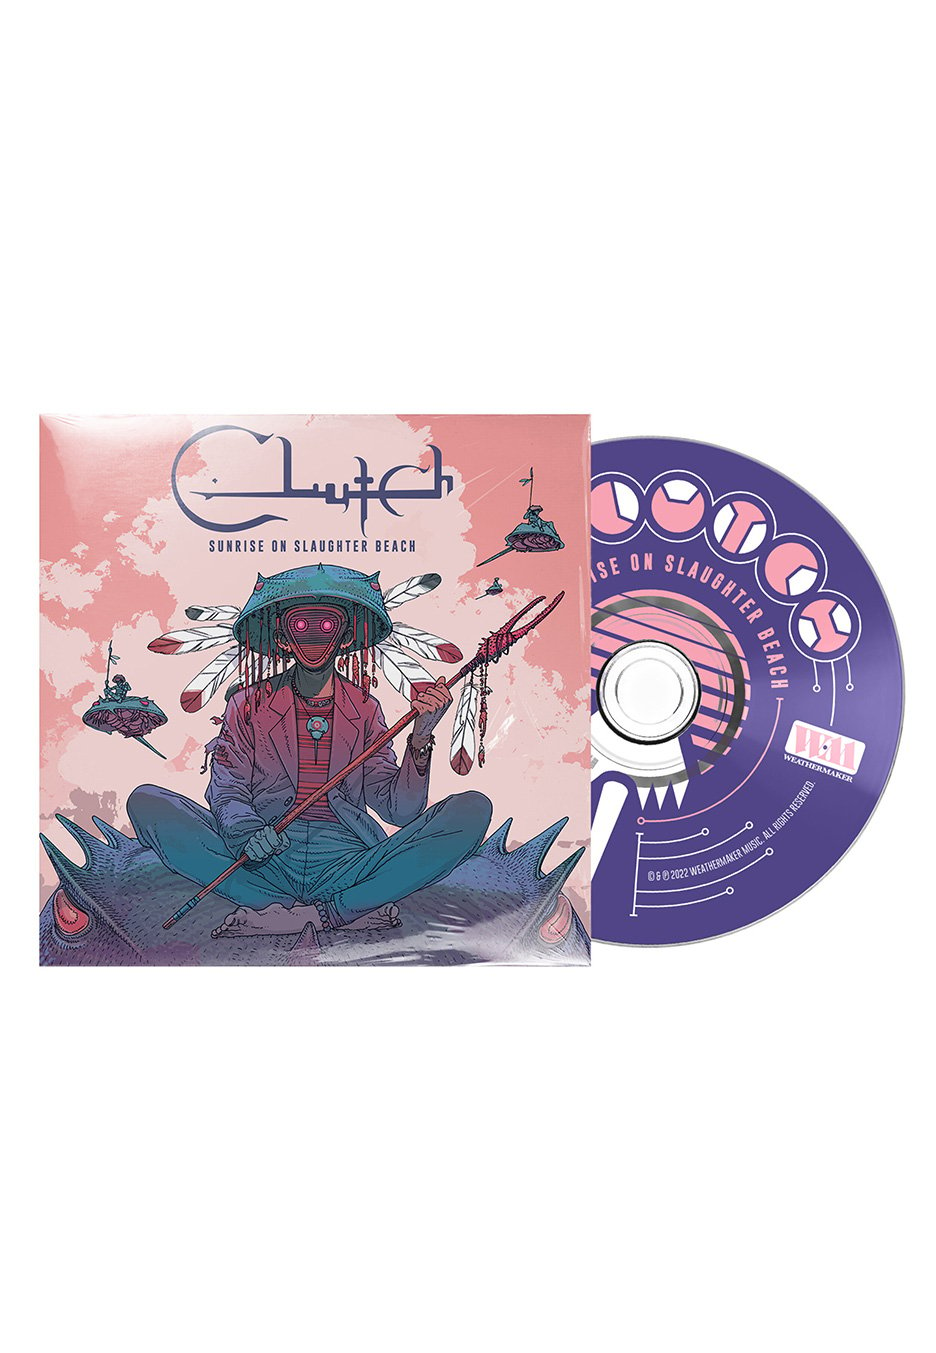 Clutch - Sunrise On Slaughter Beach - CD